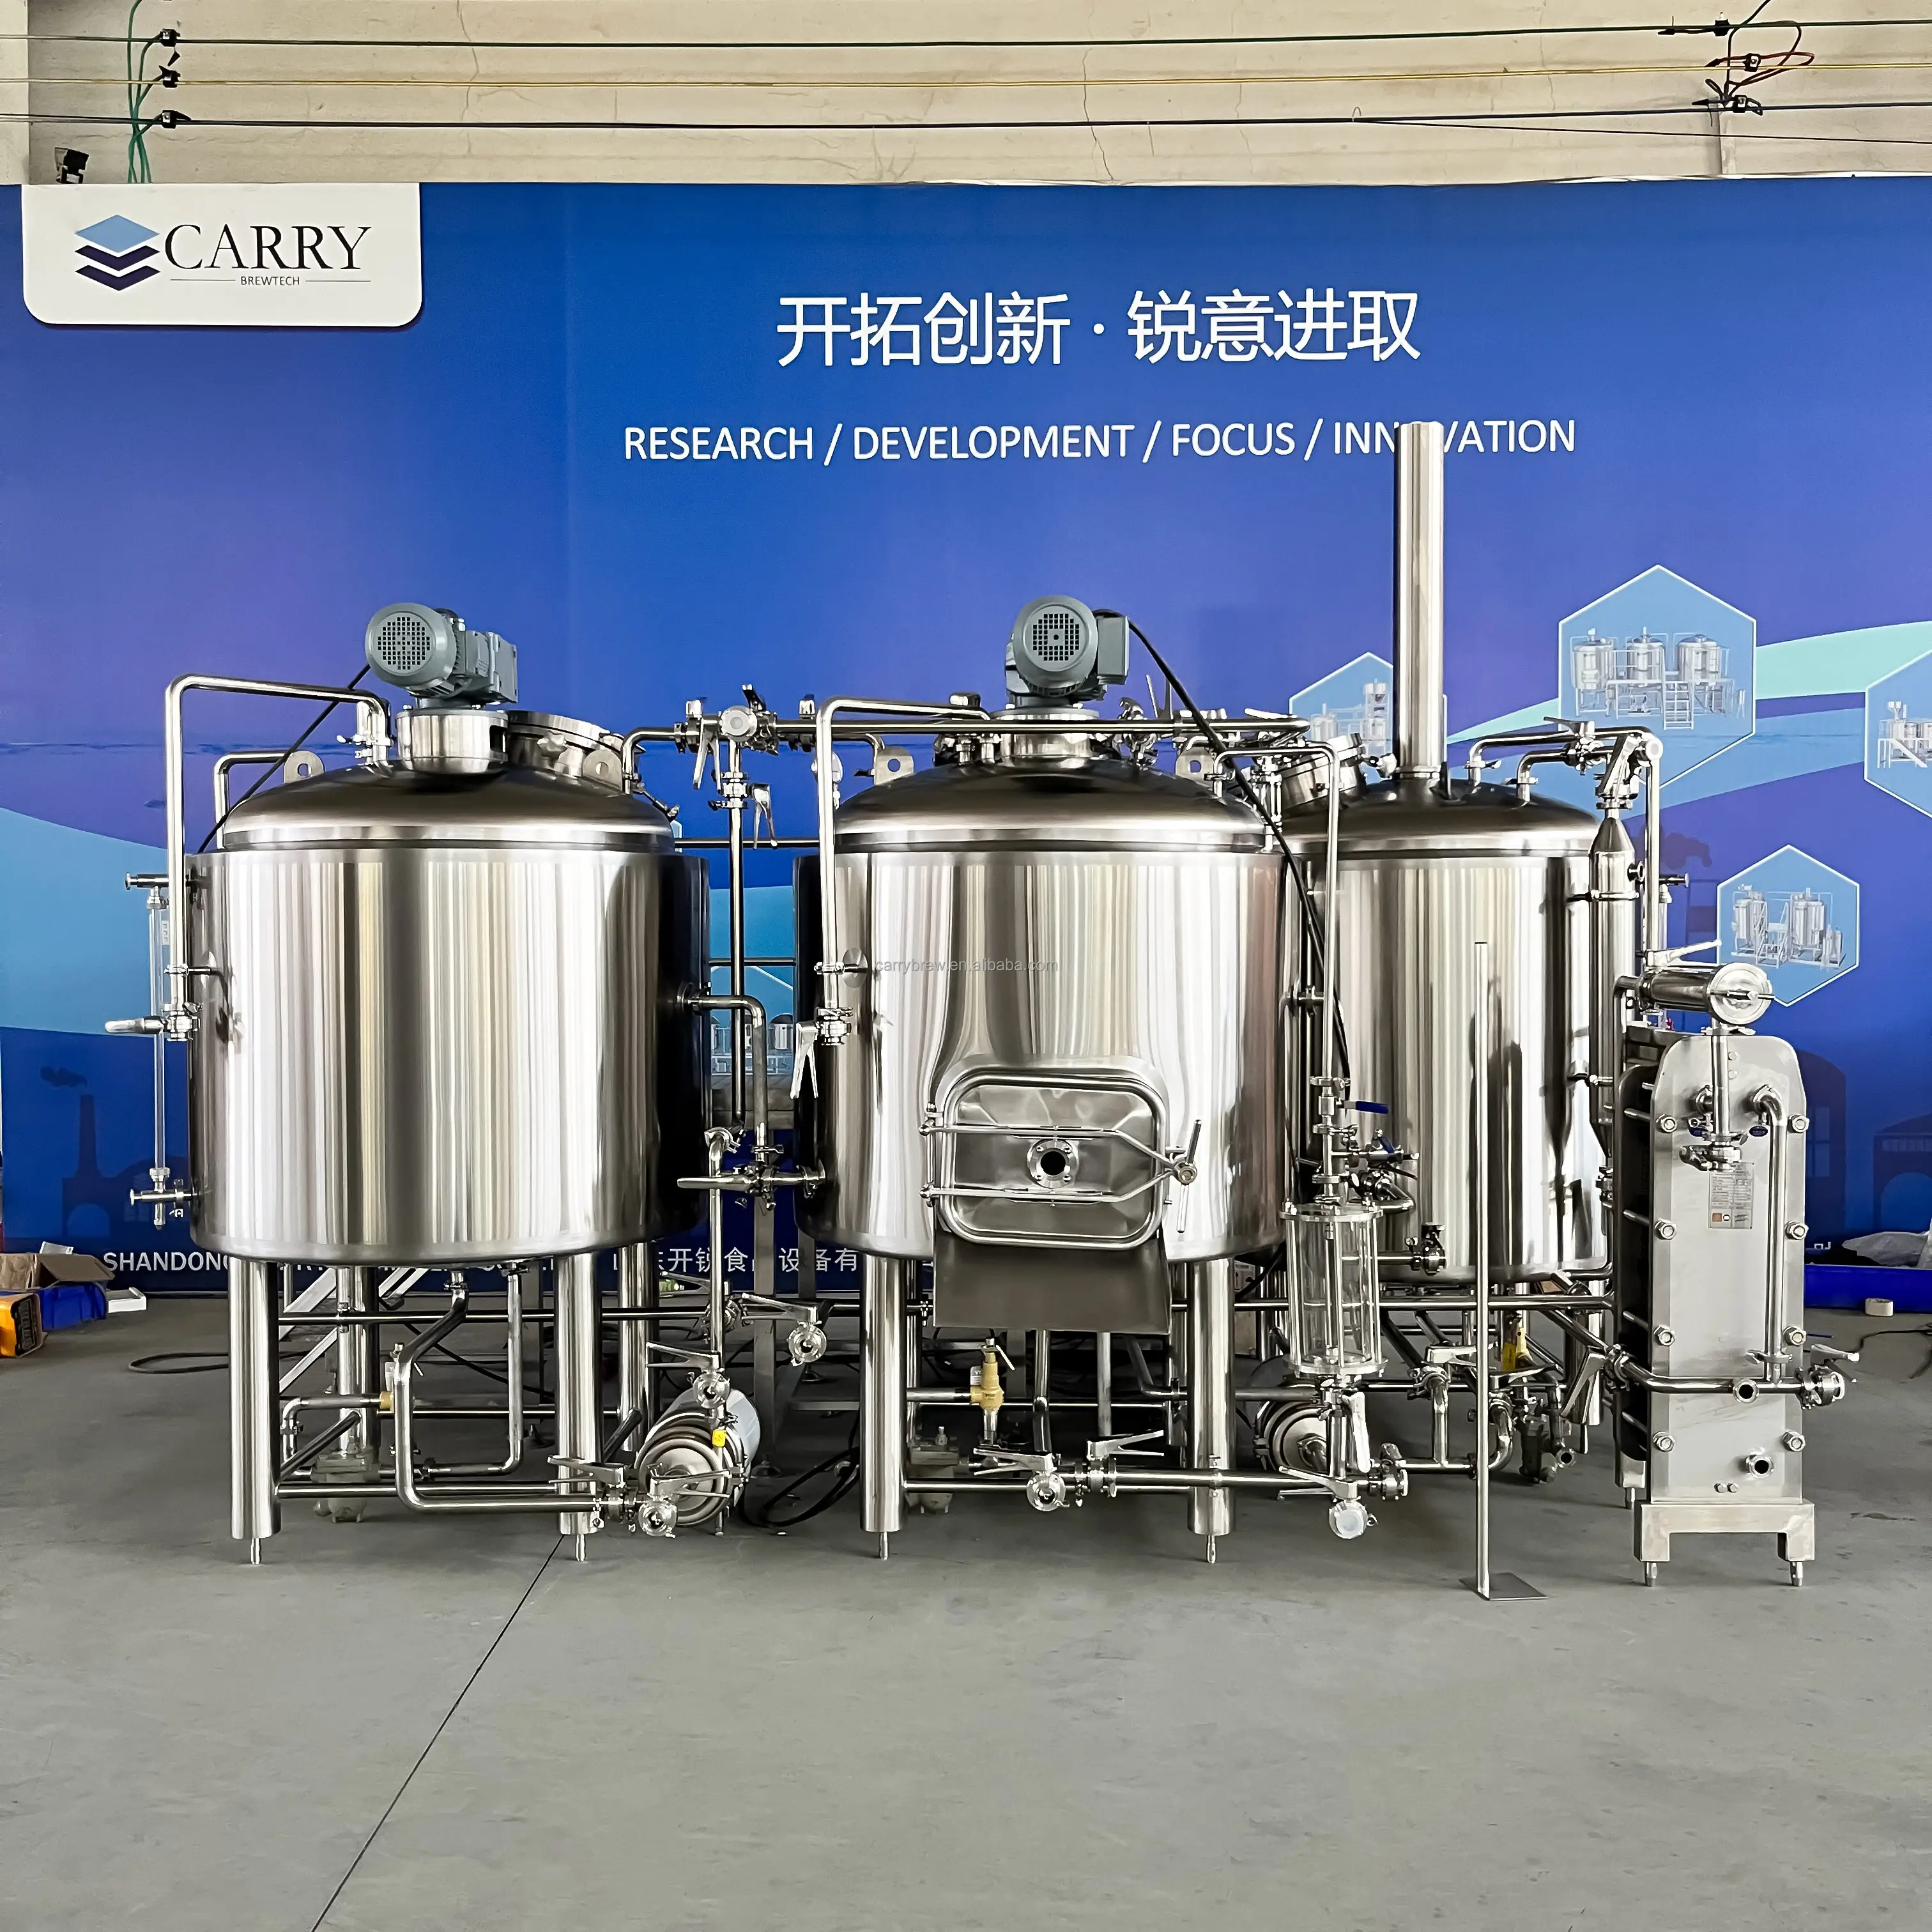 500L 800L 1000Lビール醸造所マイクロビール醸造装置と発酵装置の組み合わせターンキークラフト醸造システム